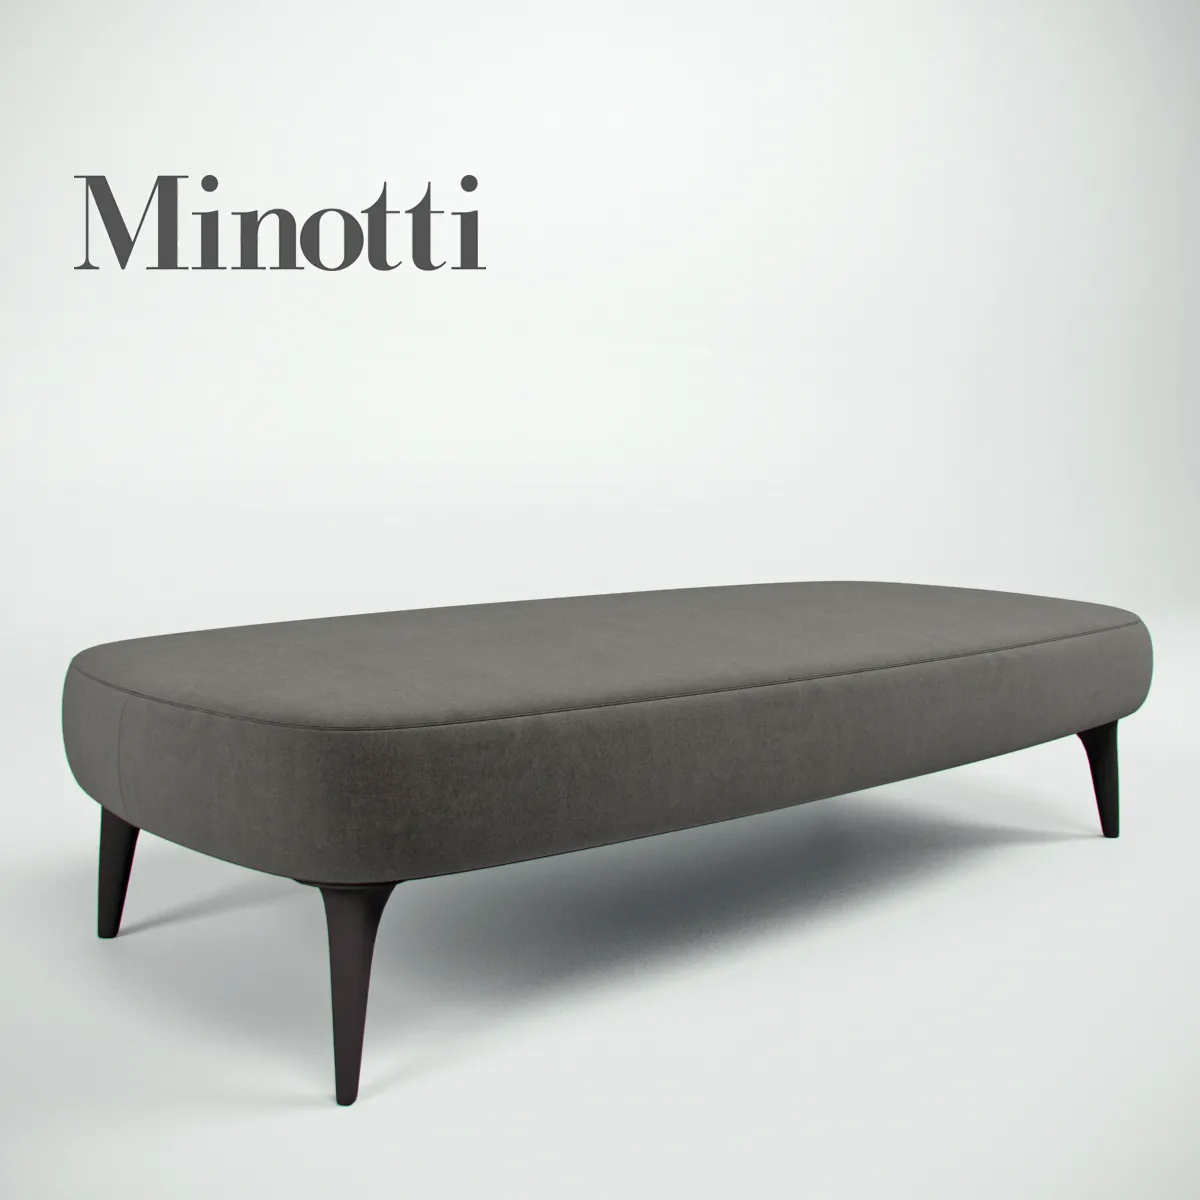 Minotti aston bench – 3864